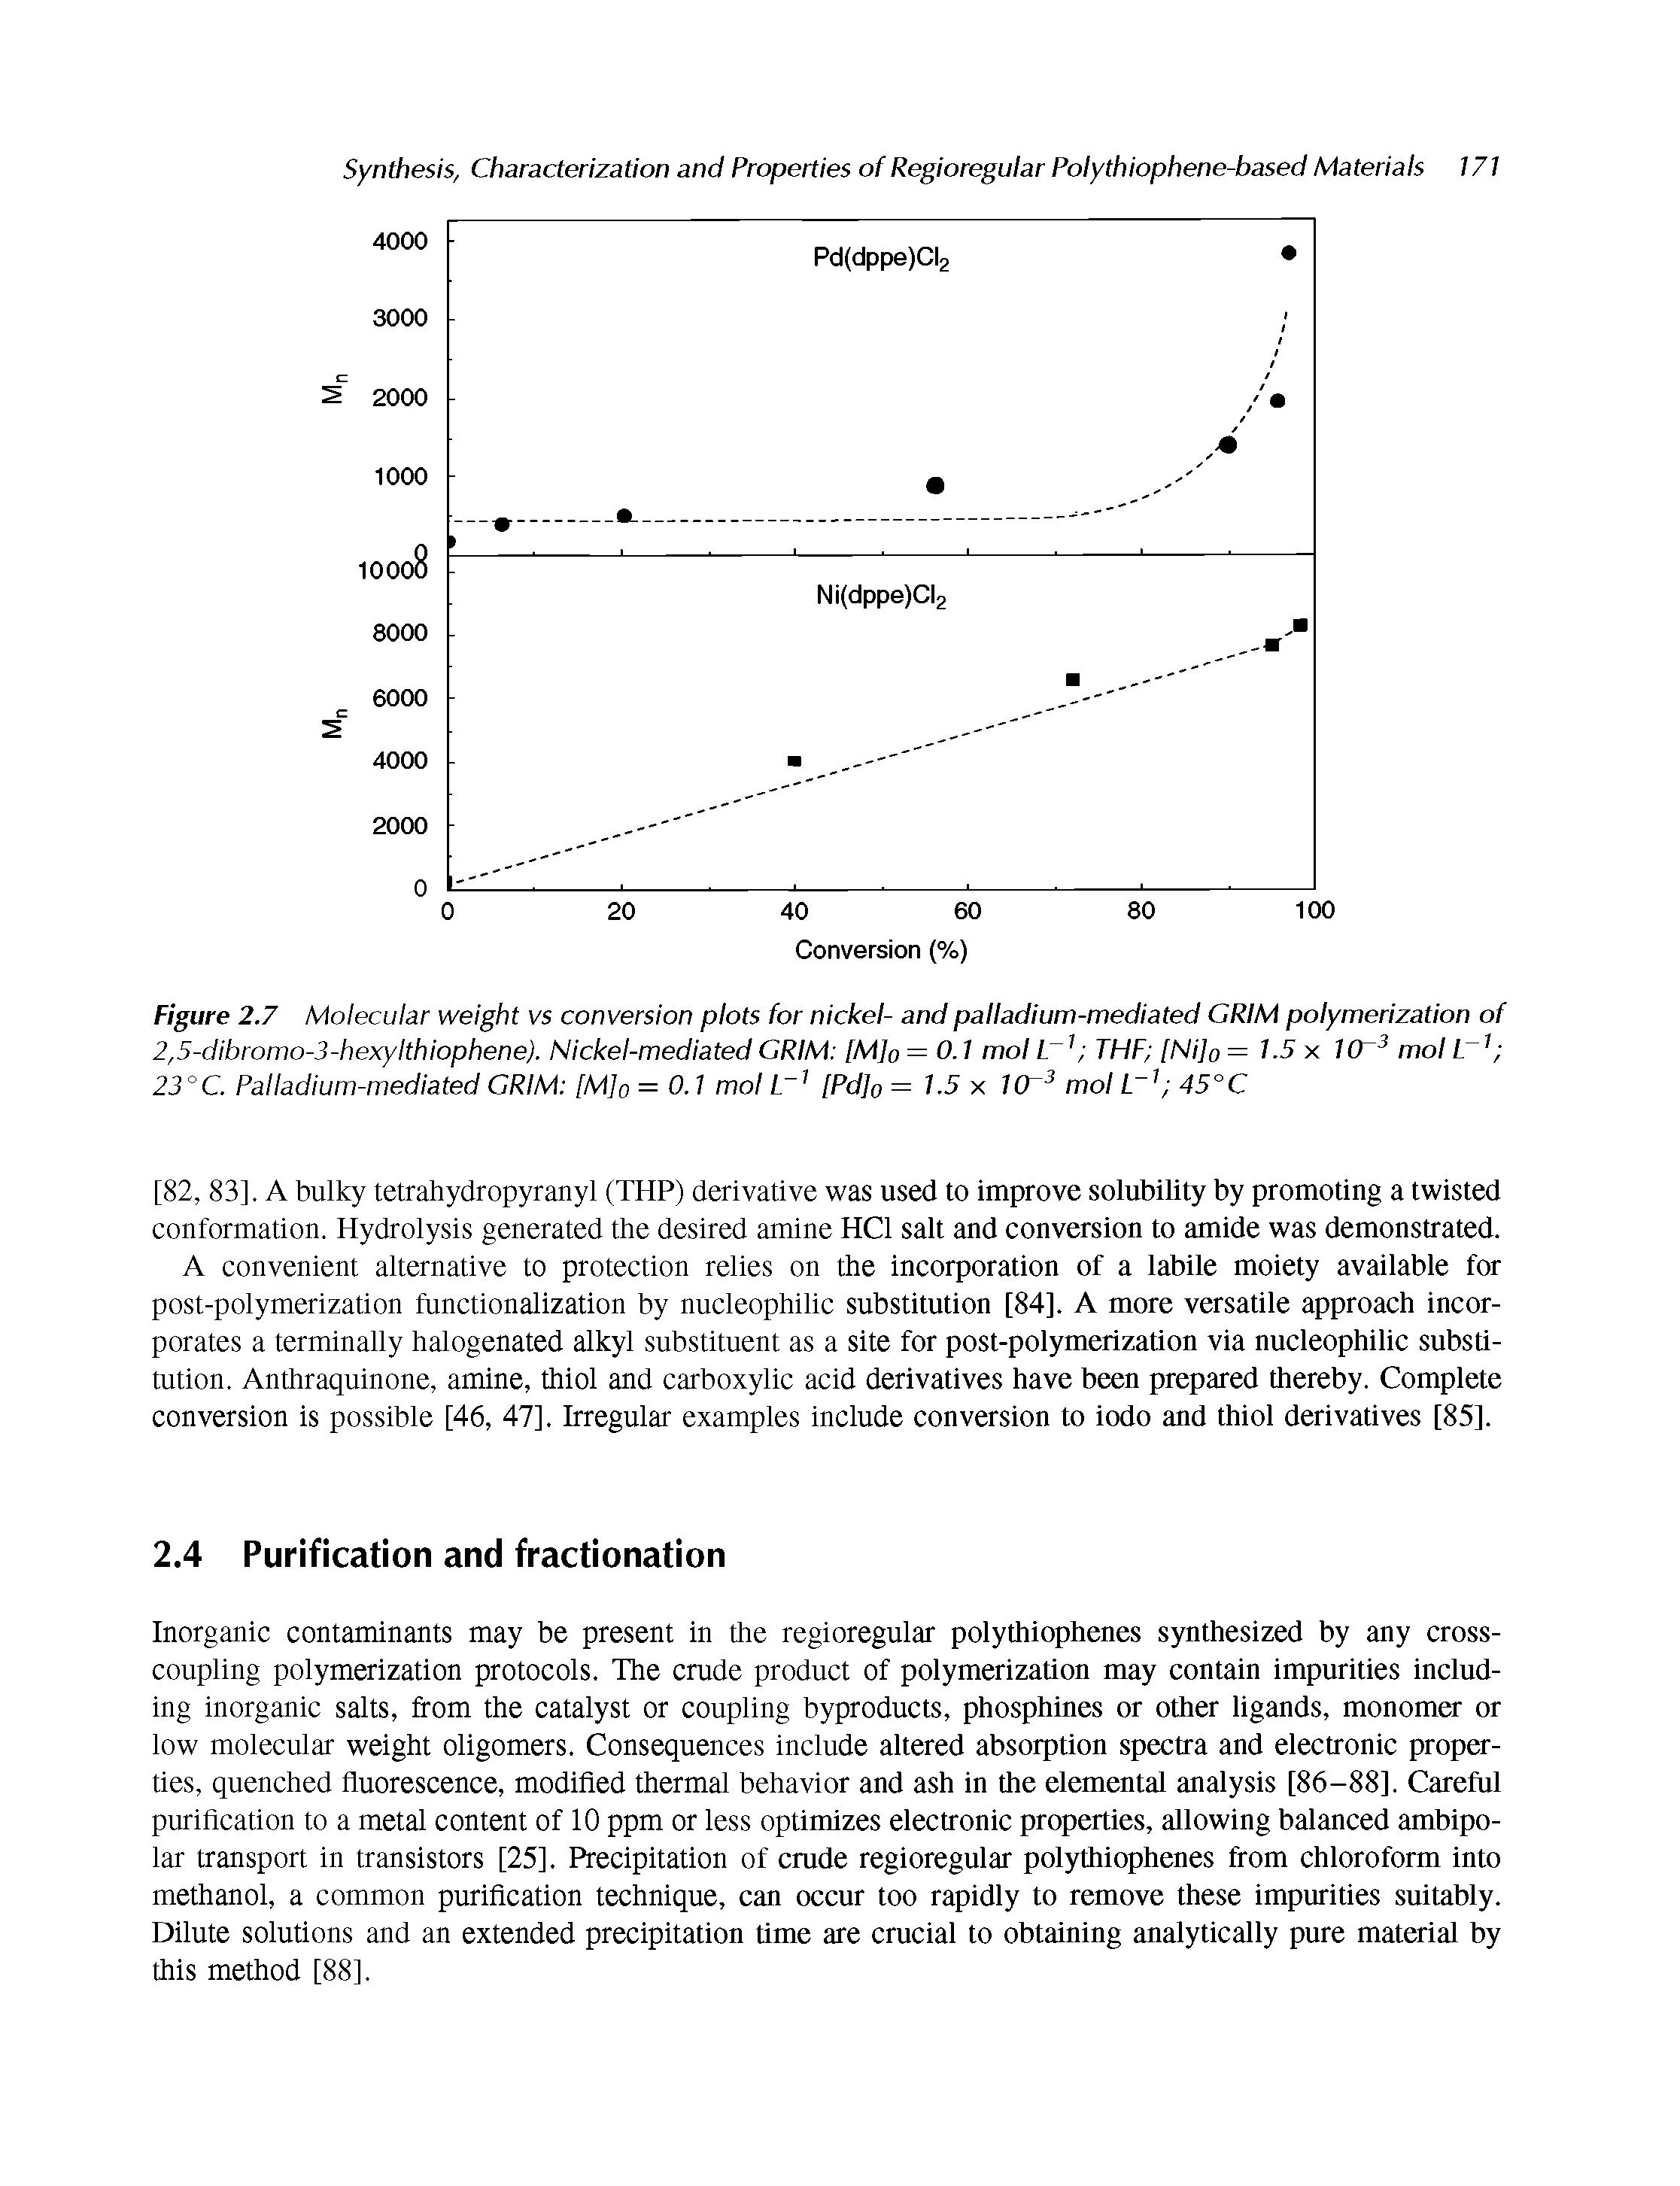 Figure 2.7 Molecular weight vs conversion plots for nickel- and palladium-mediated GRIM polymerization of 2,5-dibromo-3-hexylthiophene). Nickel-mediated GRIM [M]o = 0.1 mol THF [Ni o= 15 x 10 mol L 23°C. Palladium-mediated GRIM [M]o = 0.1 mol [Pd]o = 1.5 x 10 mol 45°C...